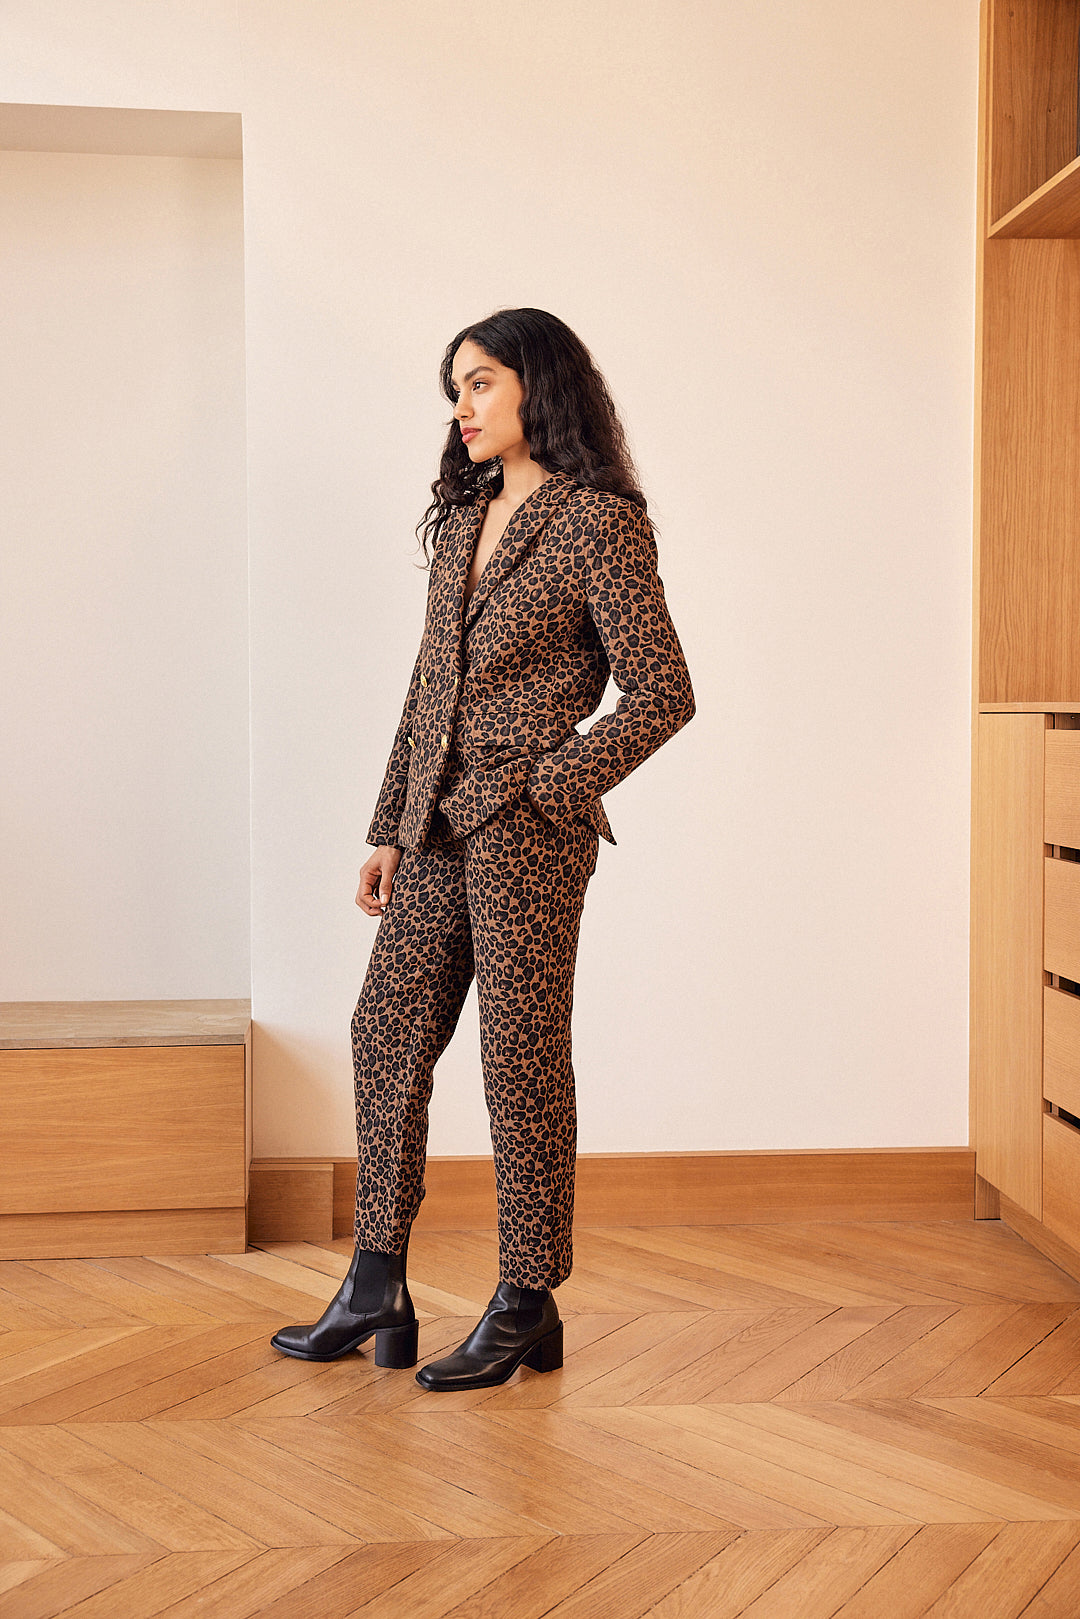 Zara Leopard Print Jacquard Coat - $ 135,00